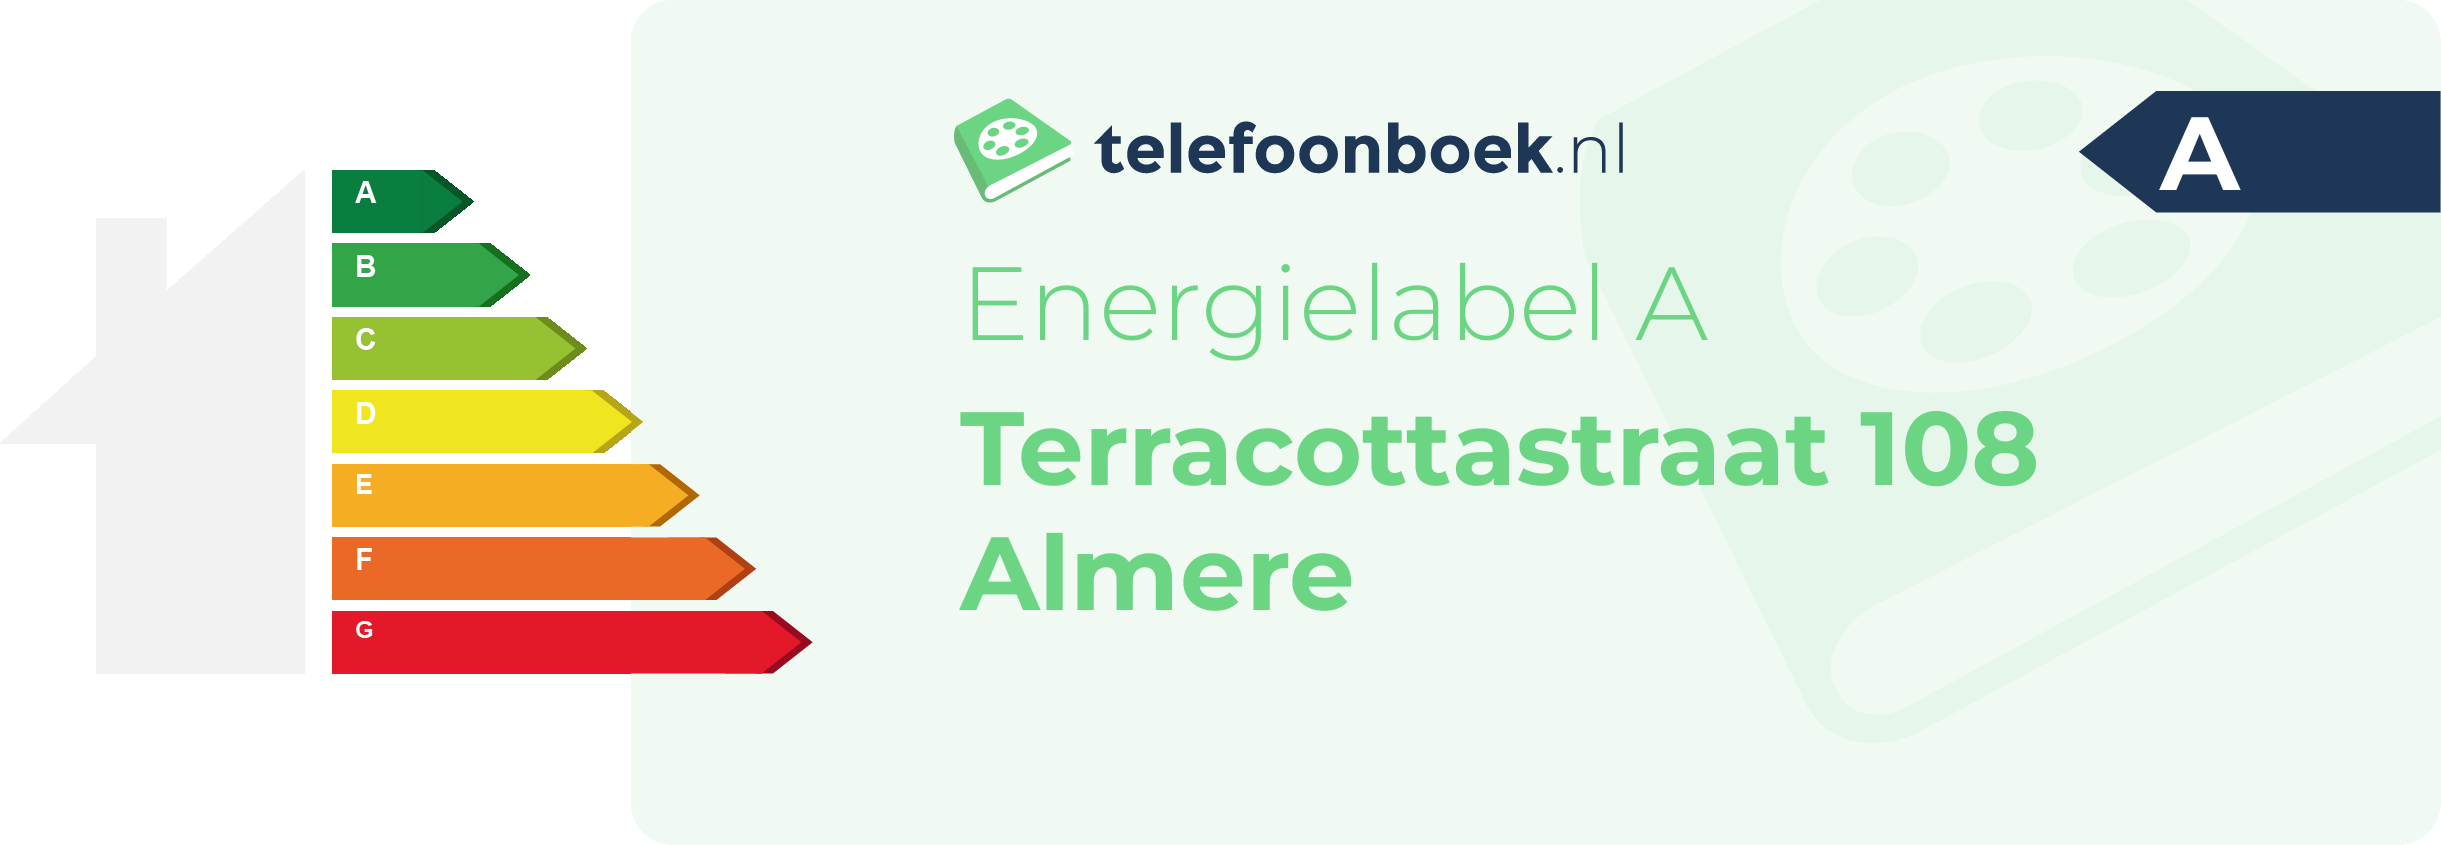 Energielabel Terracottastraat 108 Almere